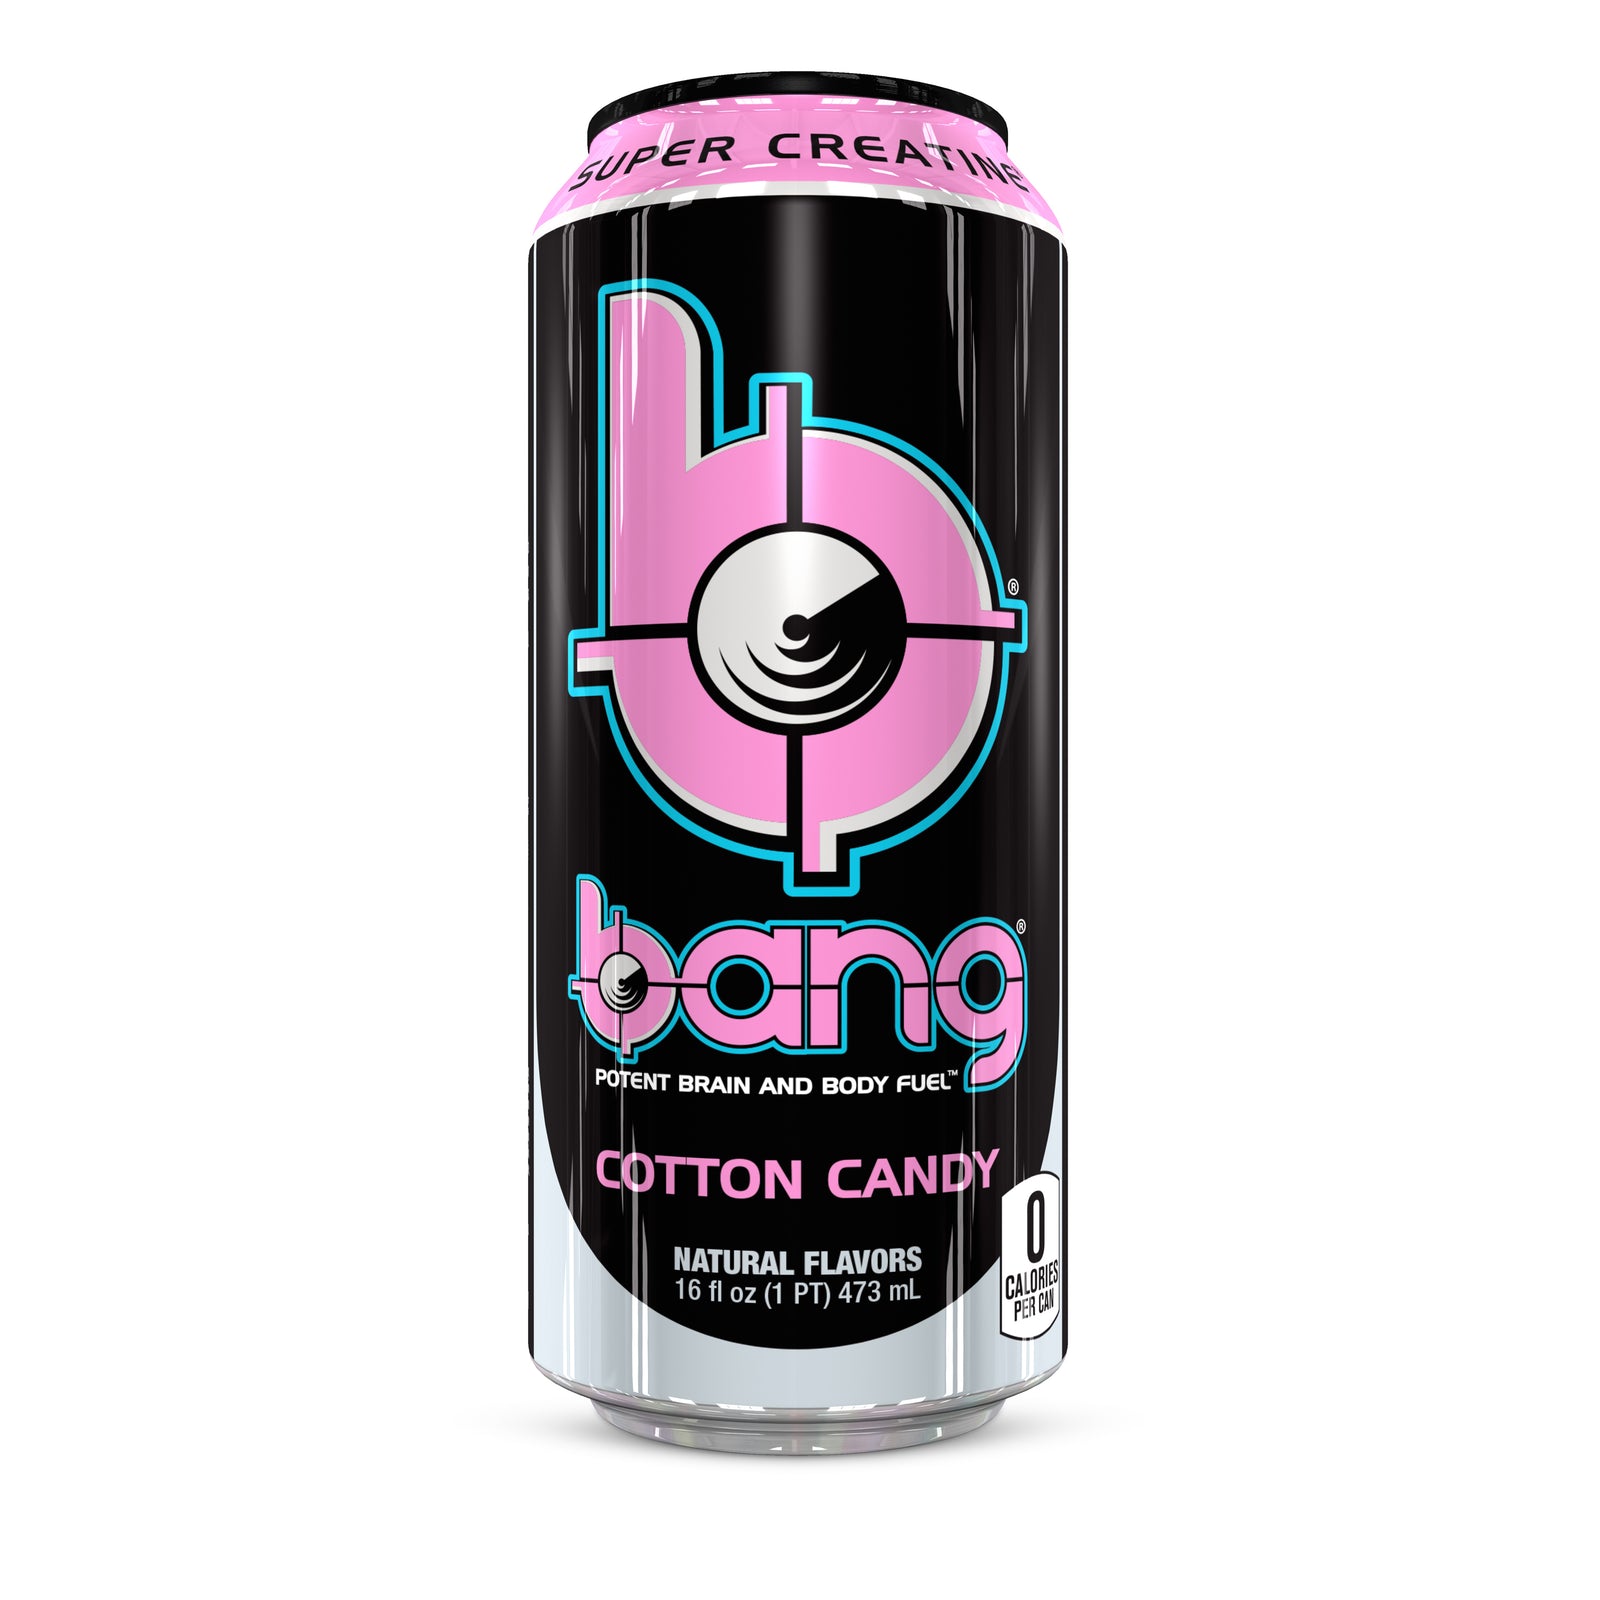 who makes bang energy drink